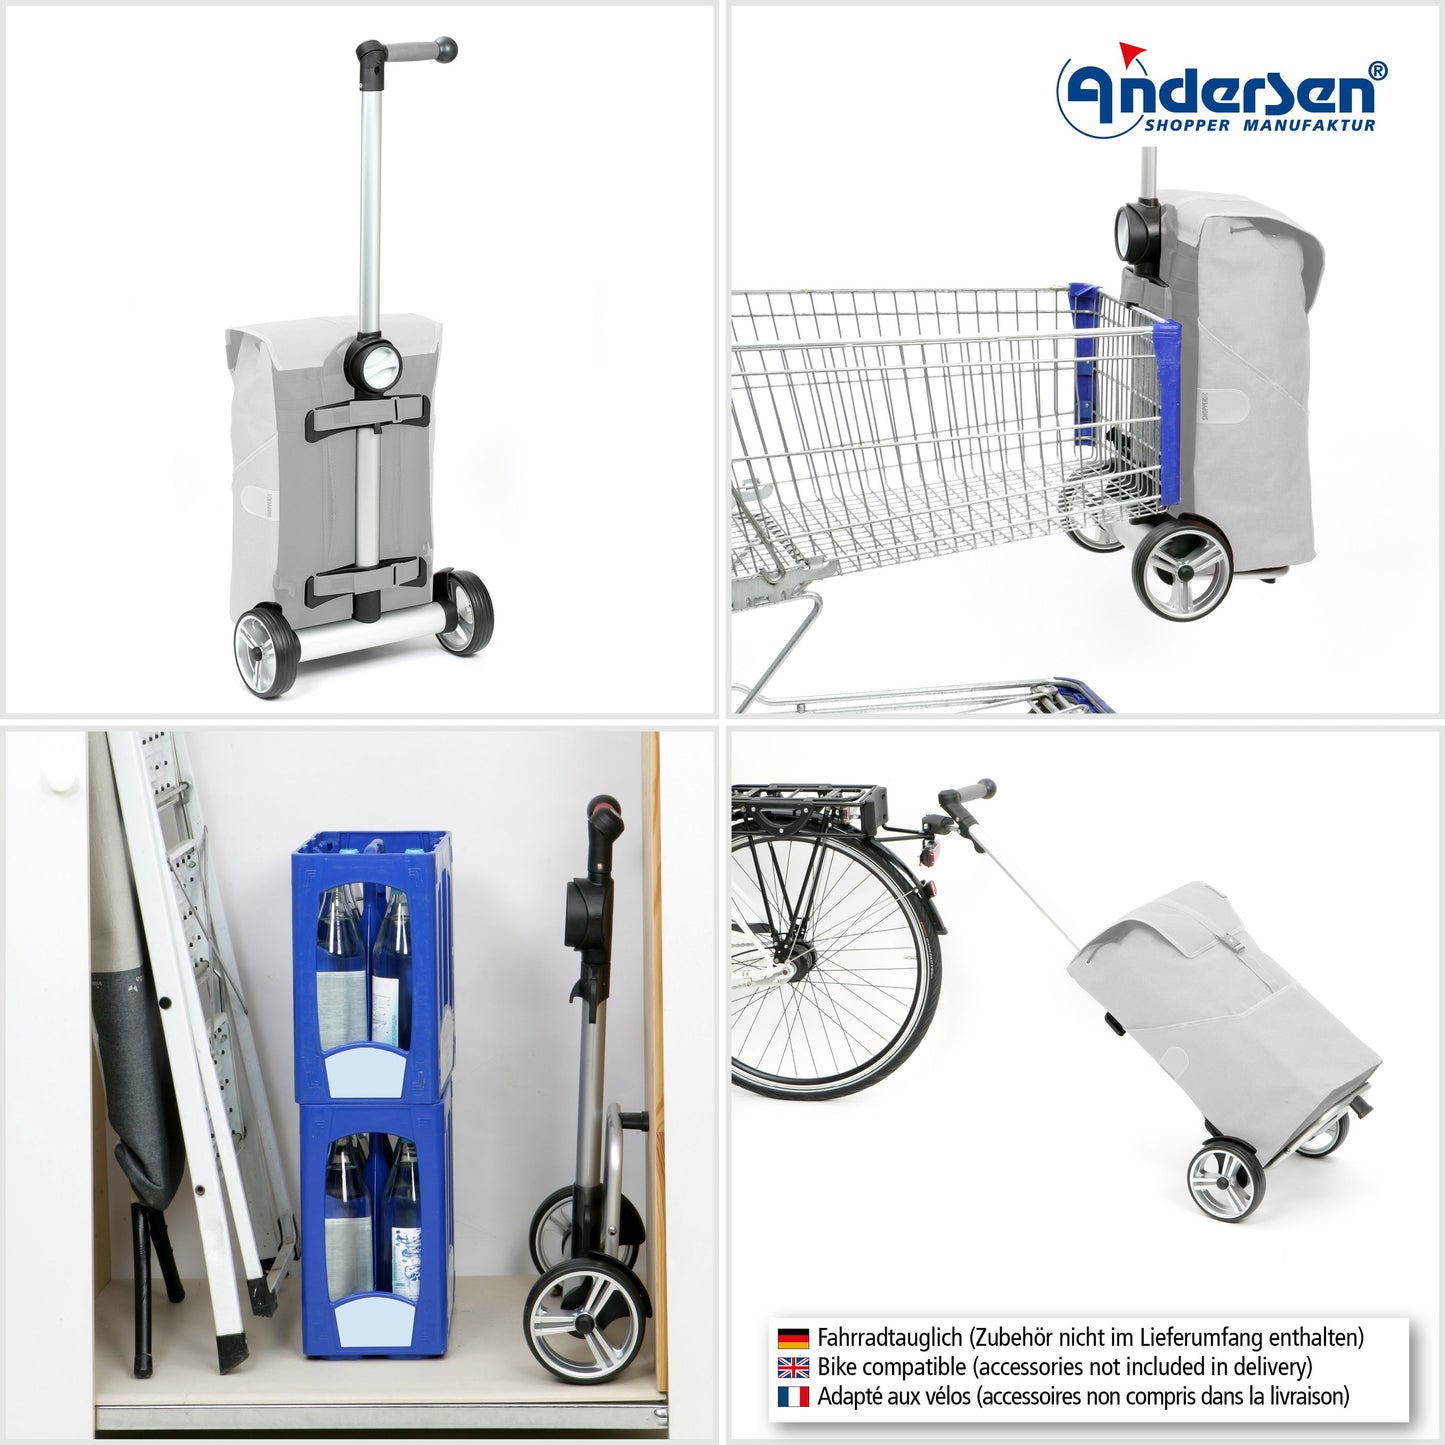 Andersen Shopper Manufaktur-Unus Shopper Inra braun-www.shopping-trolley.ch-bild5